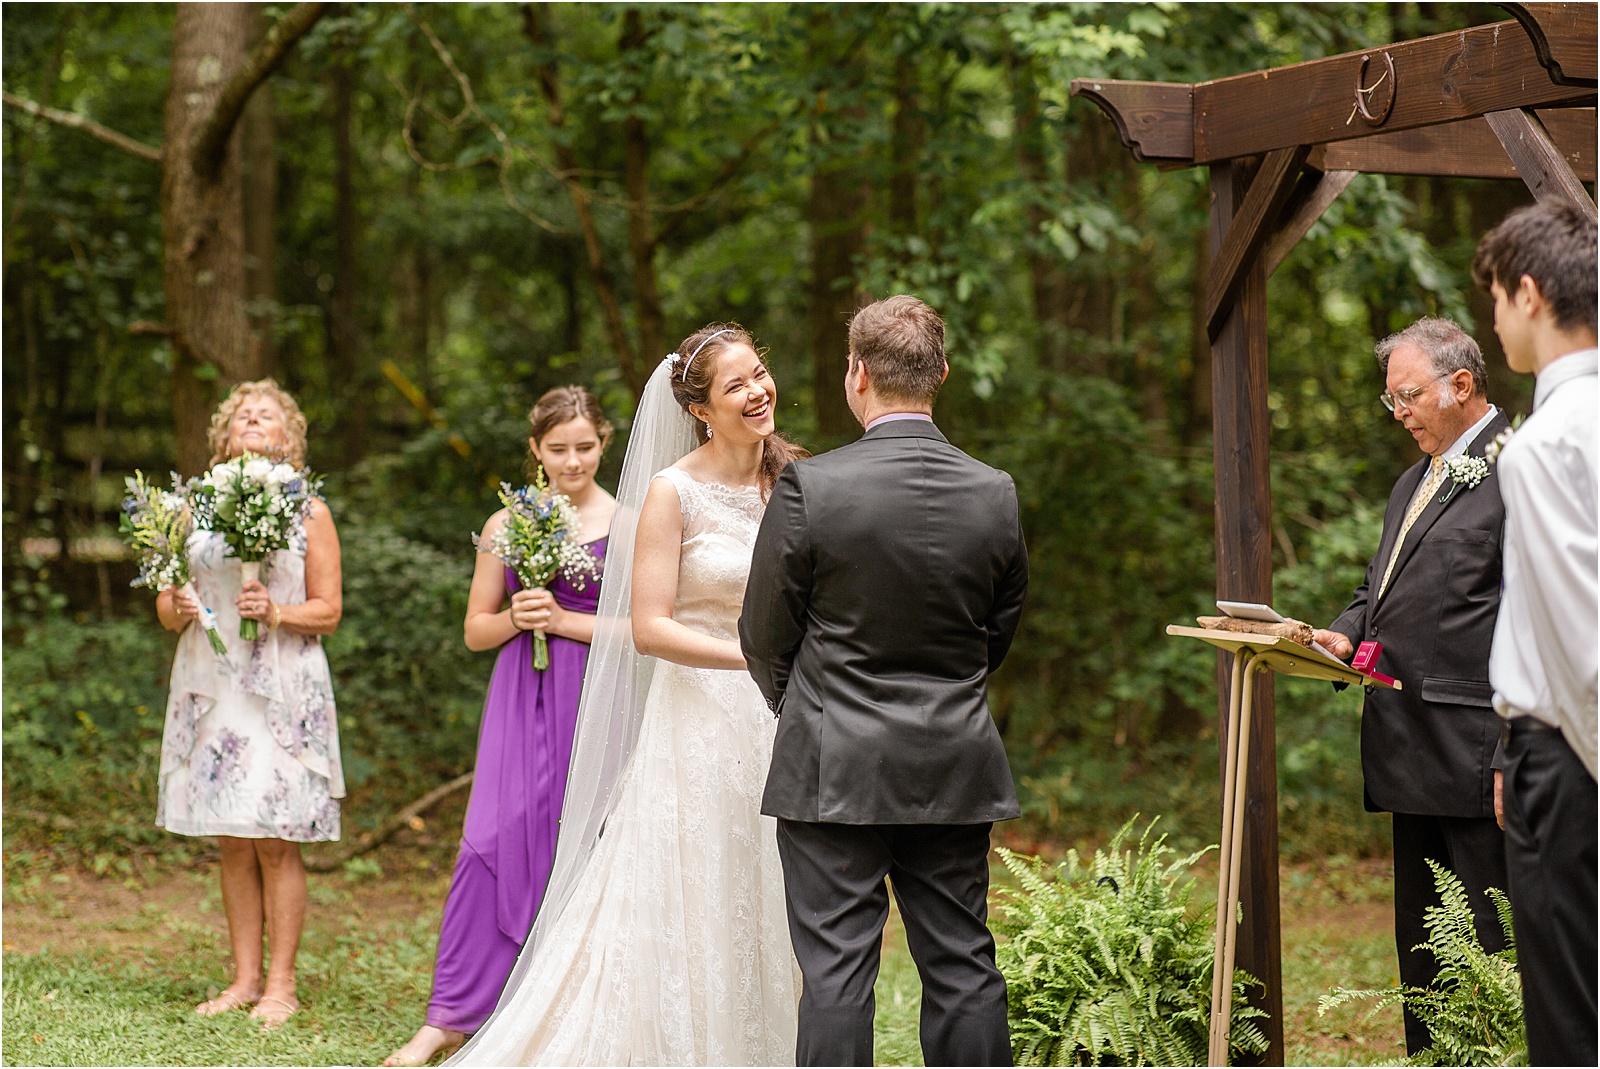 Wedding ceremony in the woods